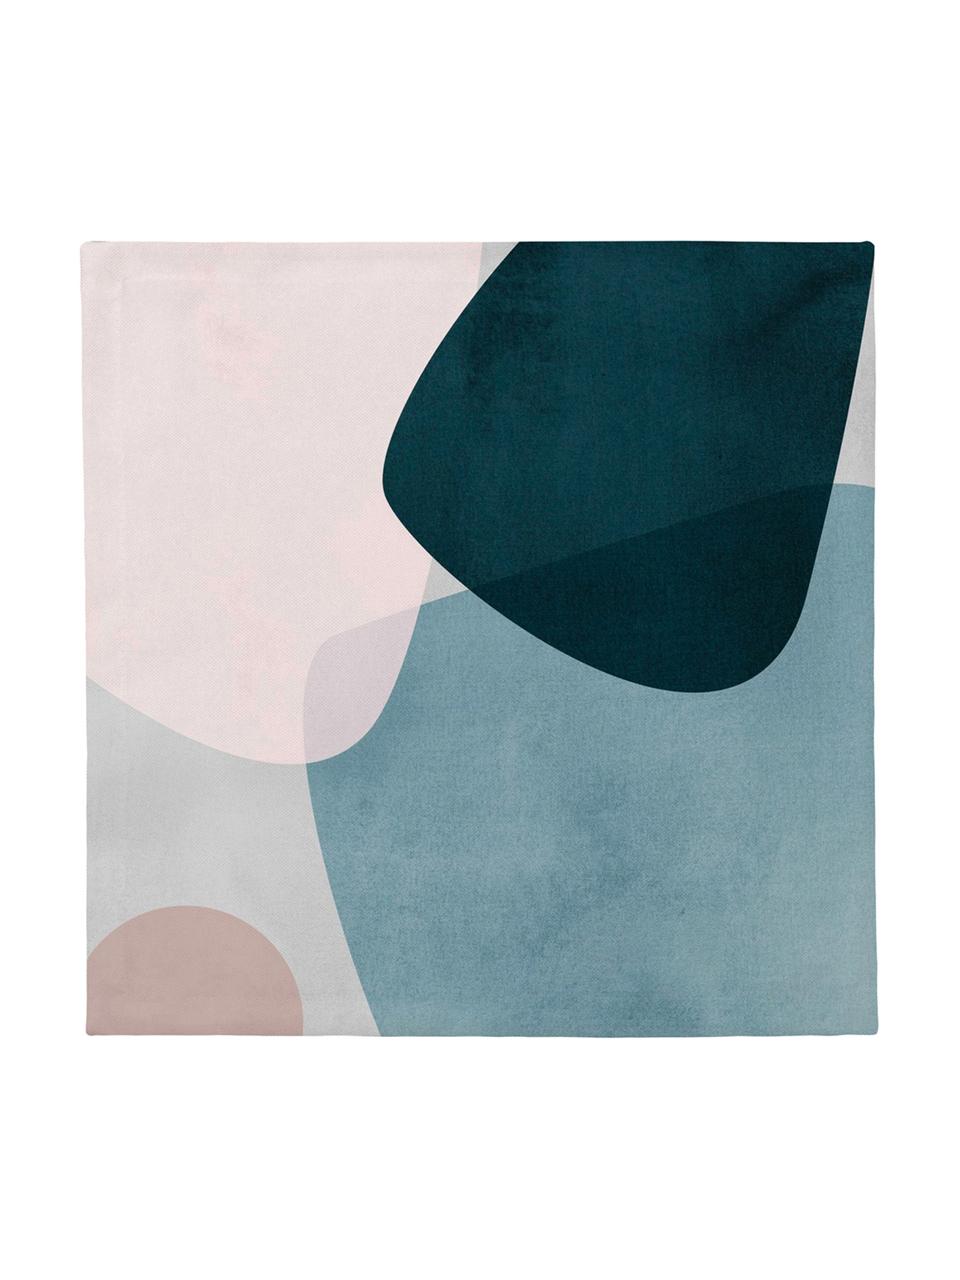 Látkový ubrousek Graphic, 4 ks, Tmavě modrá, modrá, šedá, růžová